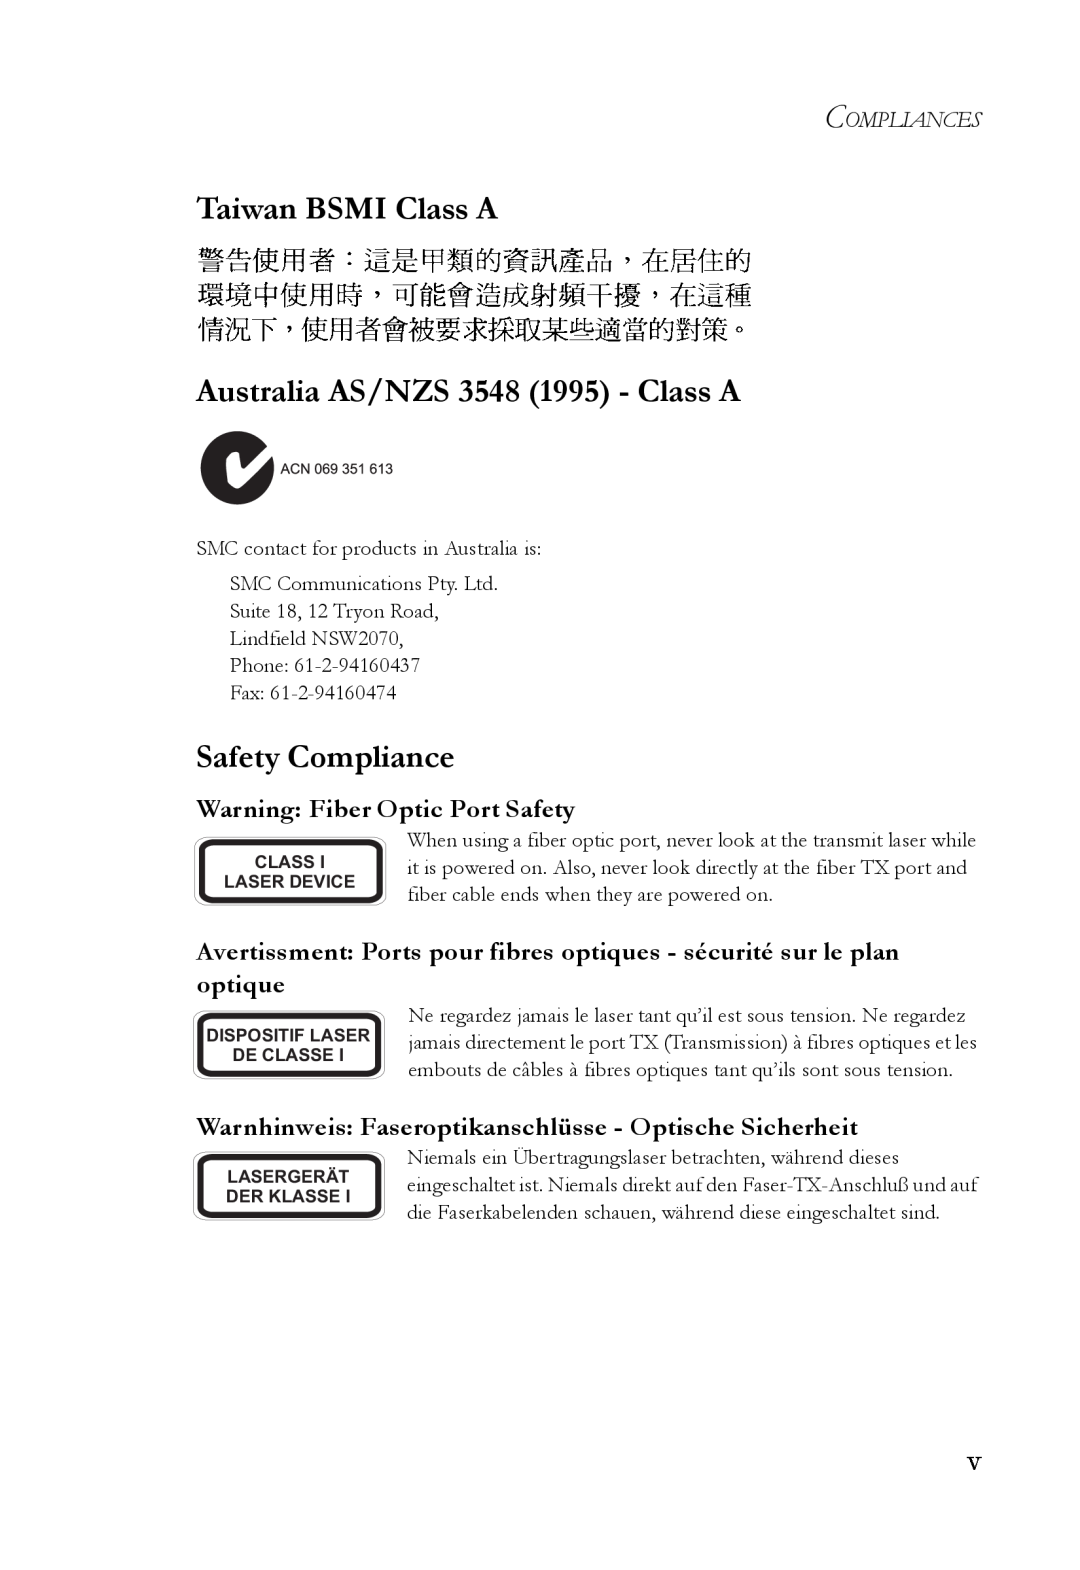 SMC Networks SMC8624T manual Taiwan BSMI Class A Australia AS/NZS 3548 1995 - Class A, Safety Compliance, Compliances 